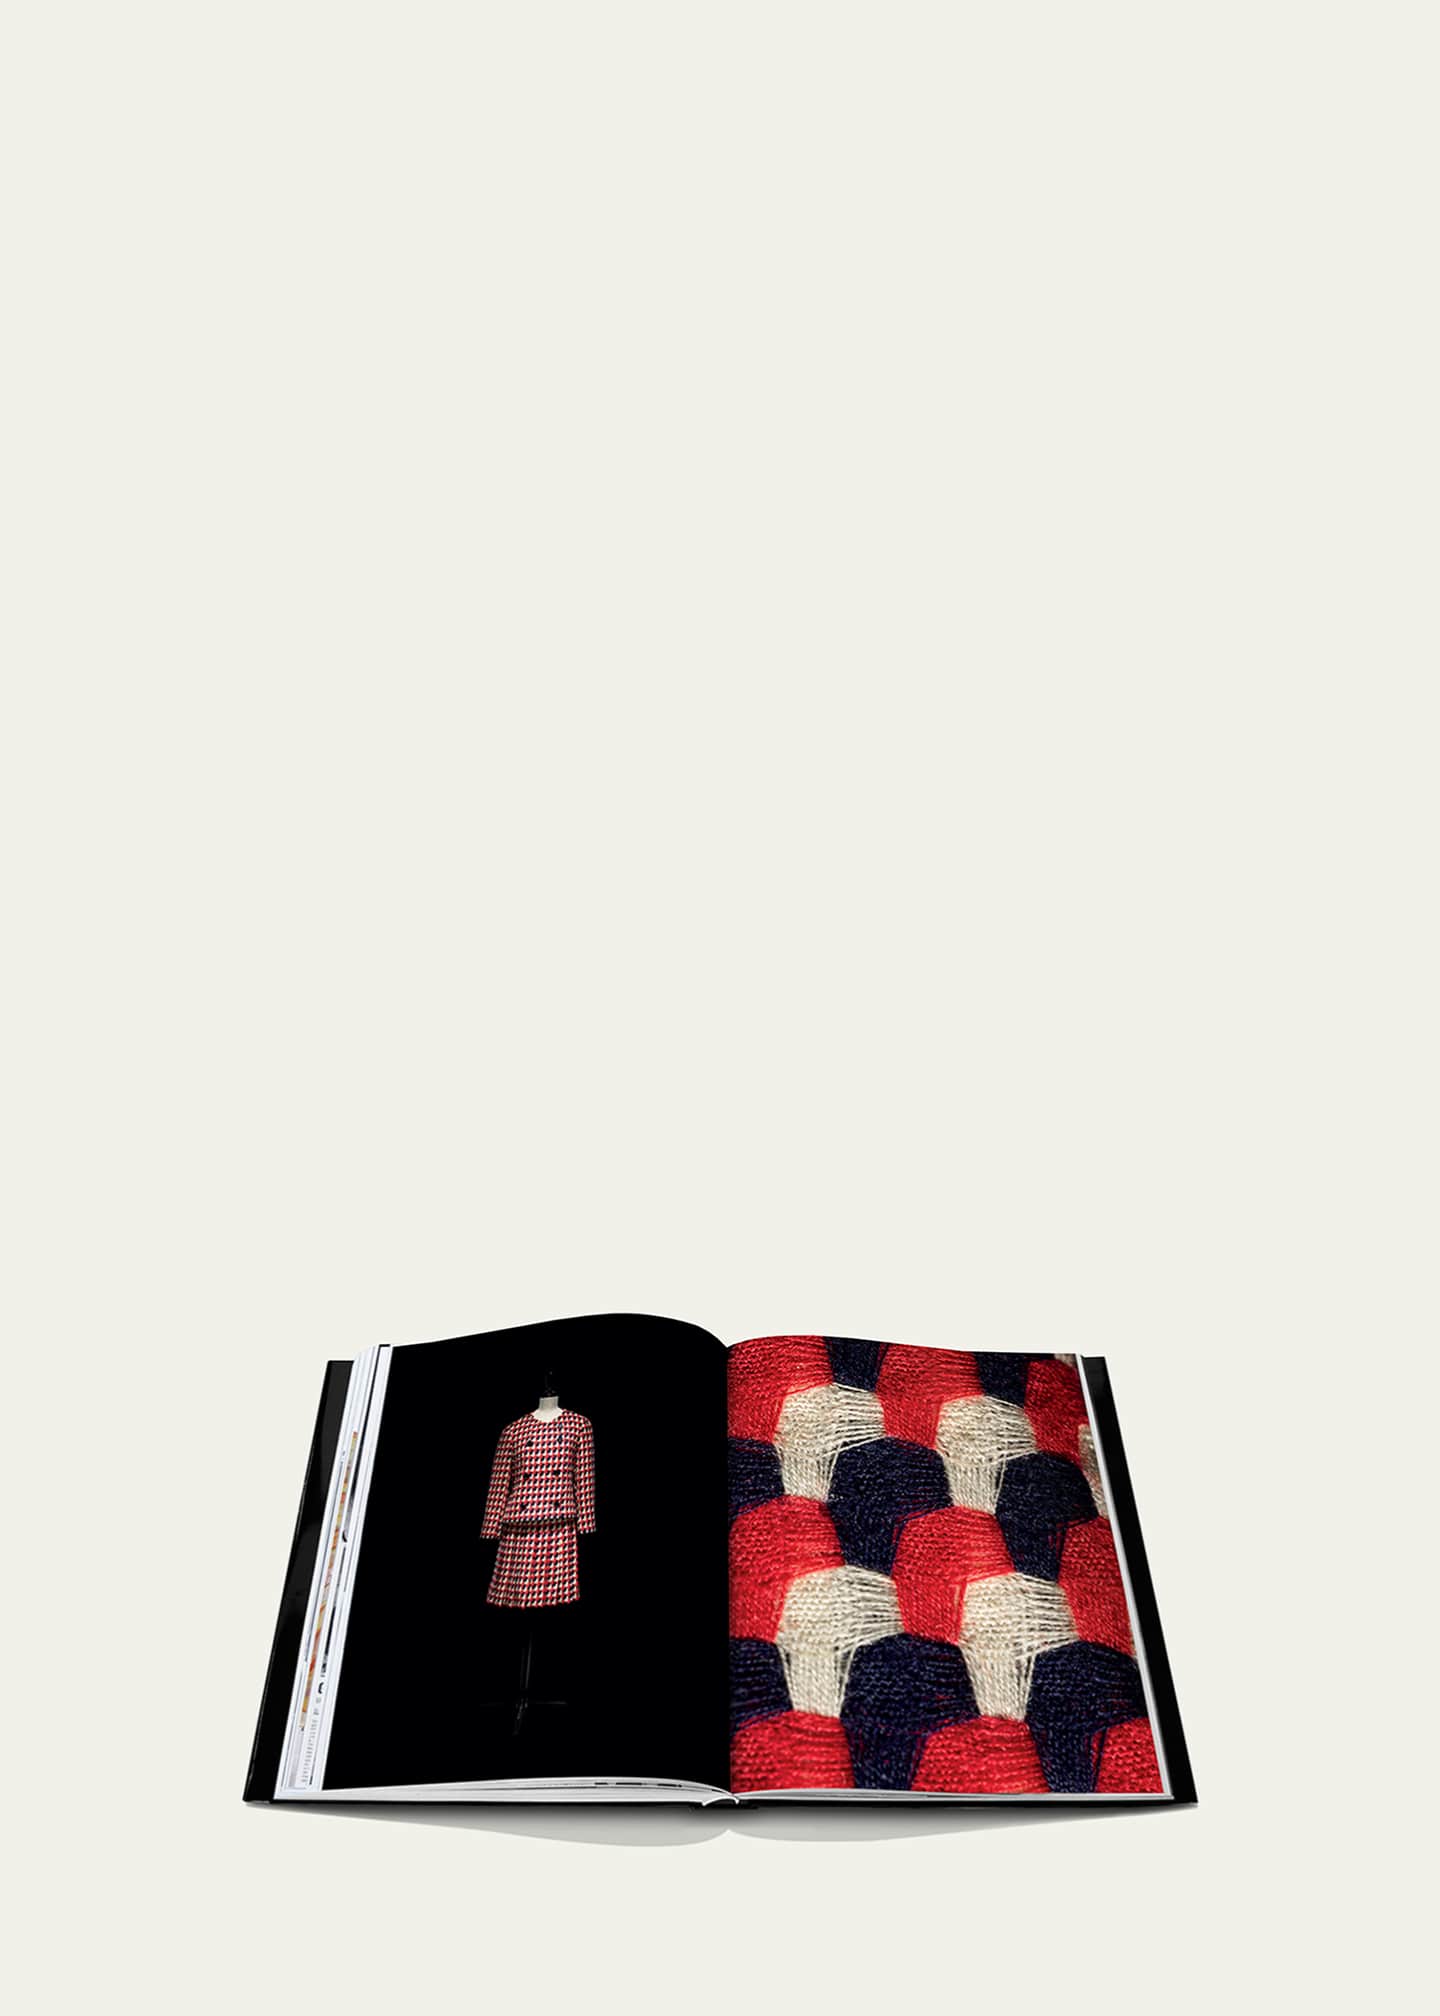 Assouline Dior Book by Marc Bohan Image 3 of 4